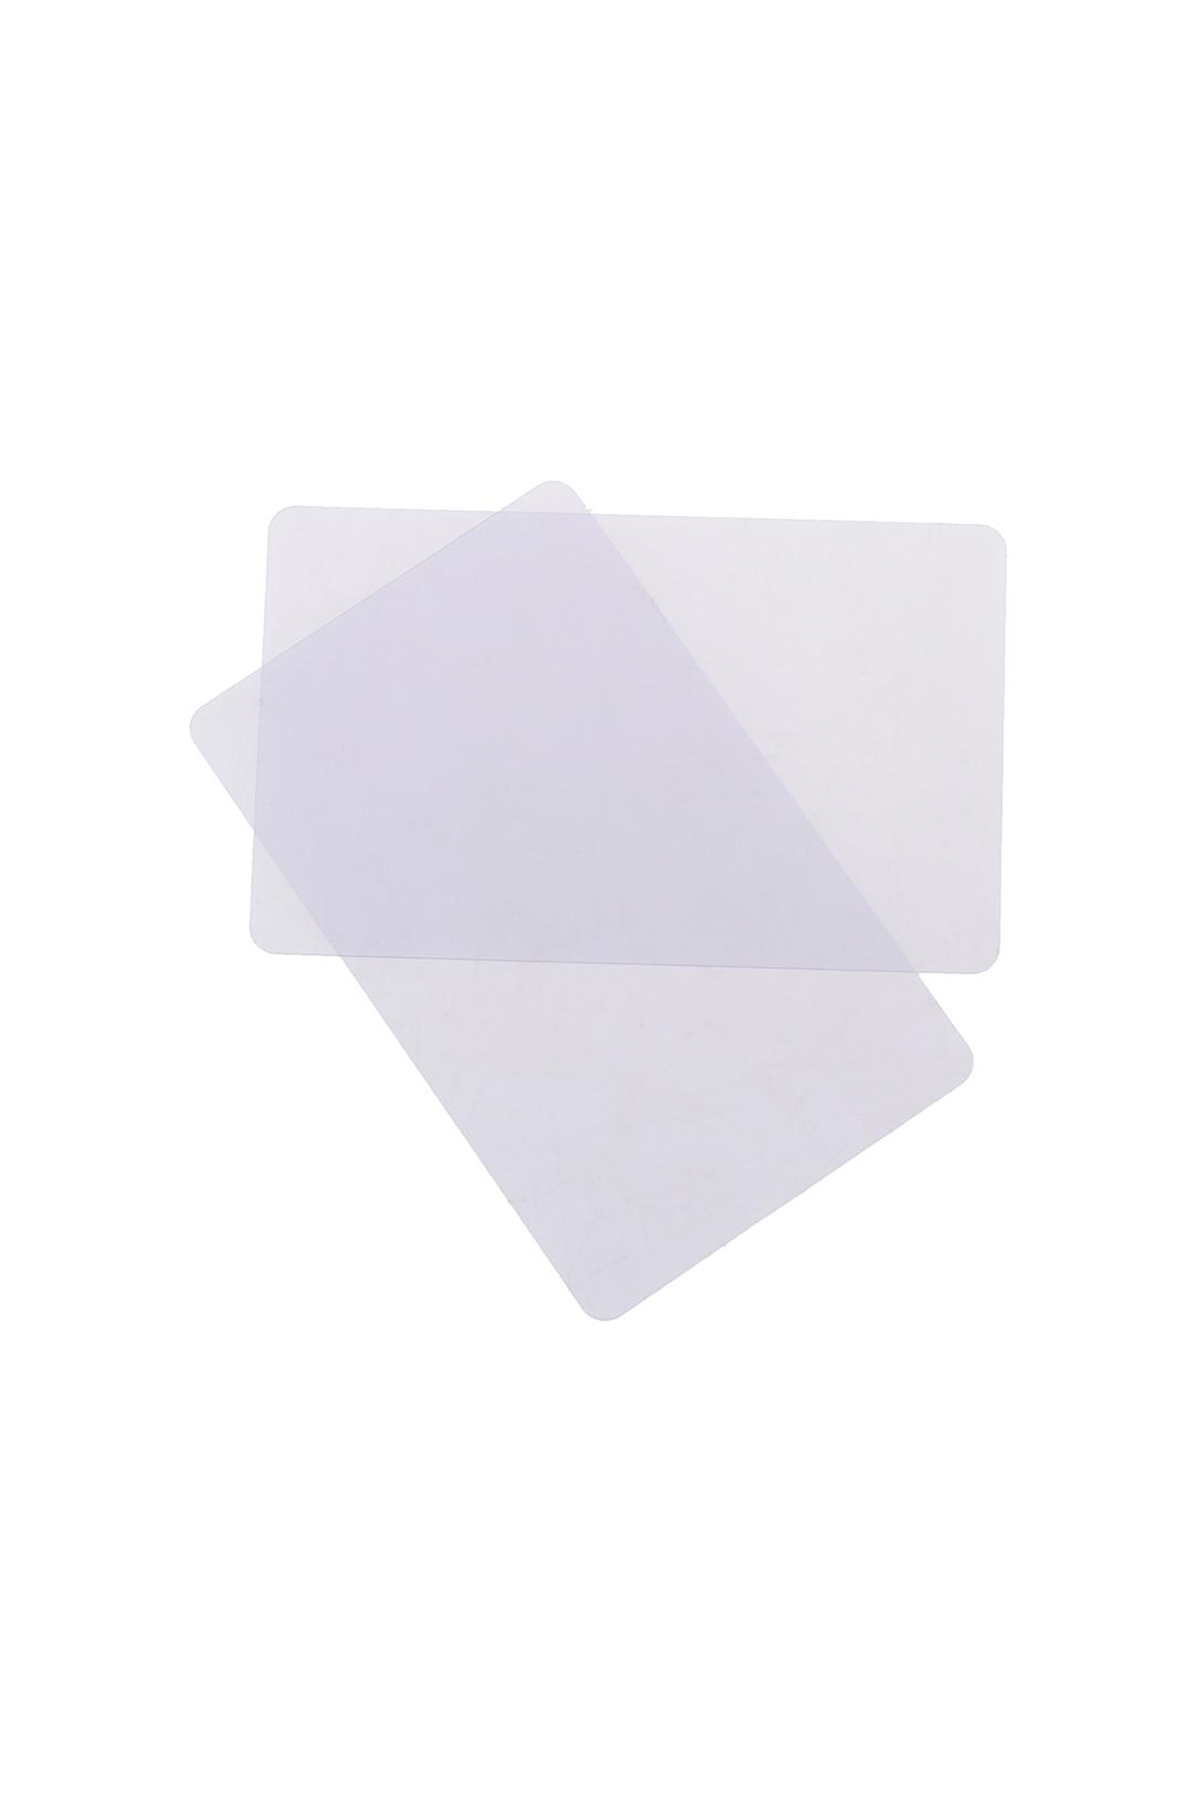 Microlux MX022 Ekran Kasa Sökme Aparatı Plastik Kart (2 Adet)